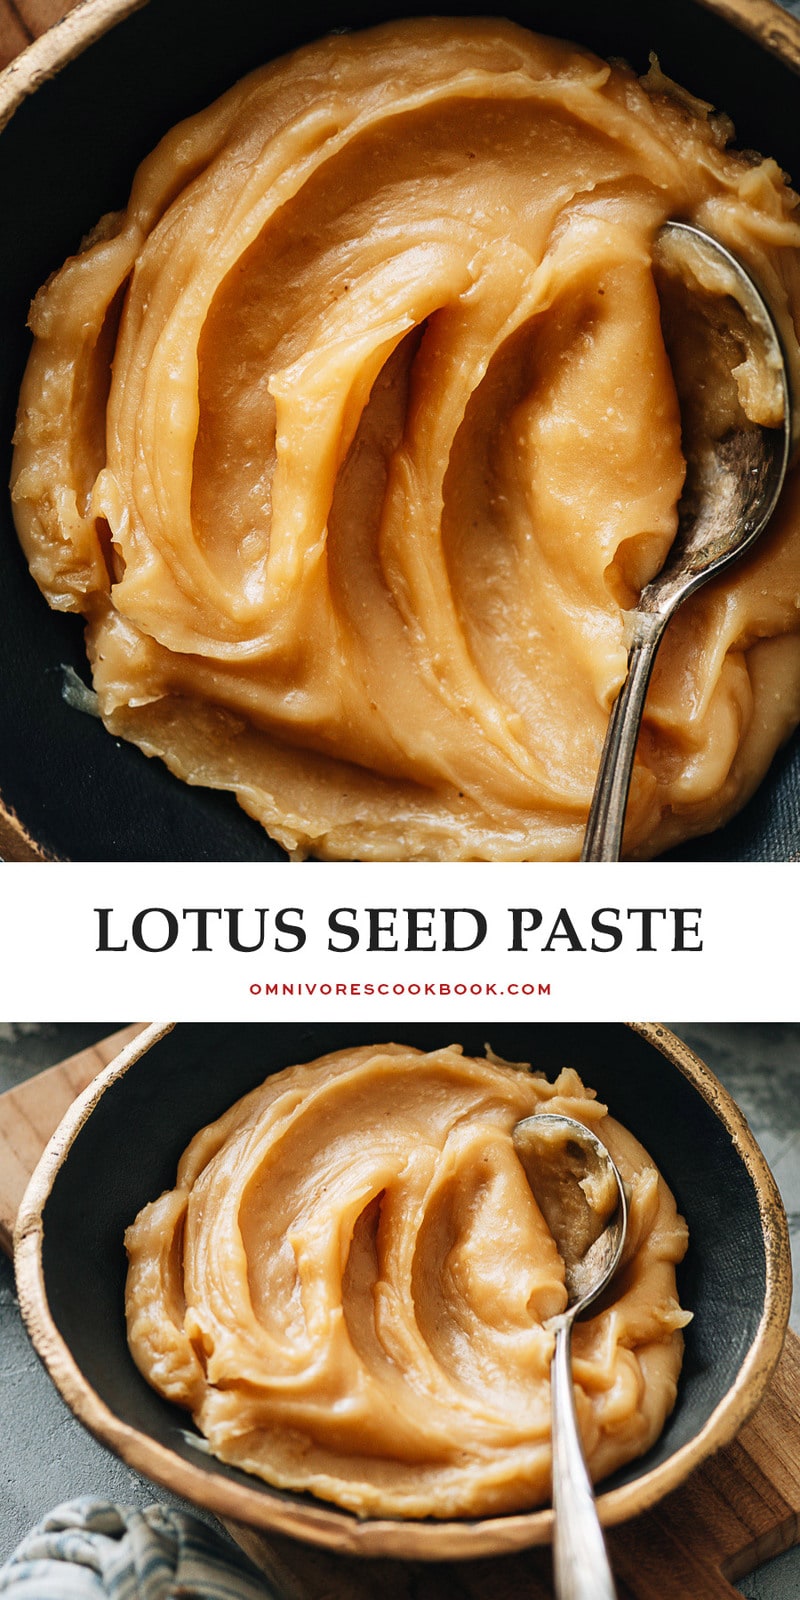 lotus seed paste vs white lotus seed paste